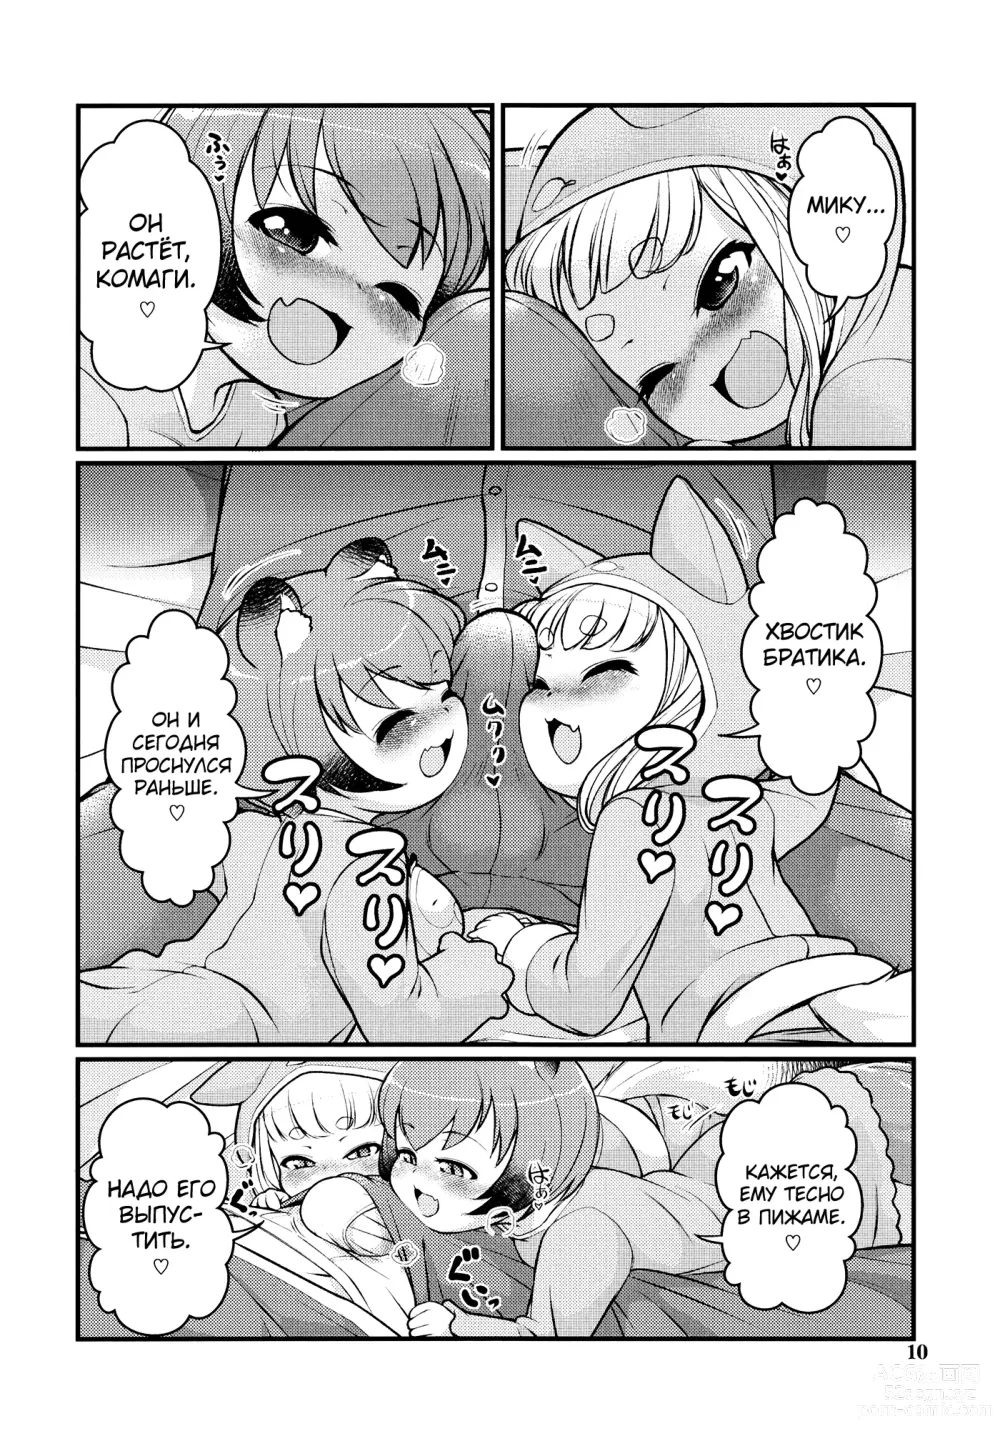 Page 9 of doujinshi KemoMimi Morning Routine 2